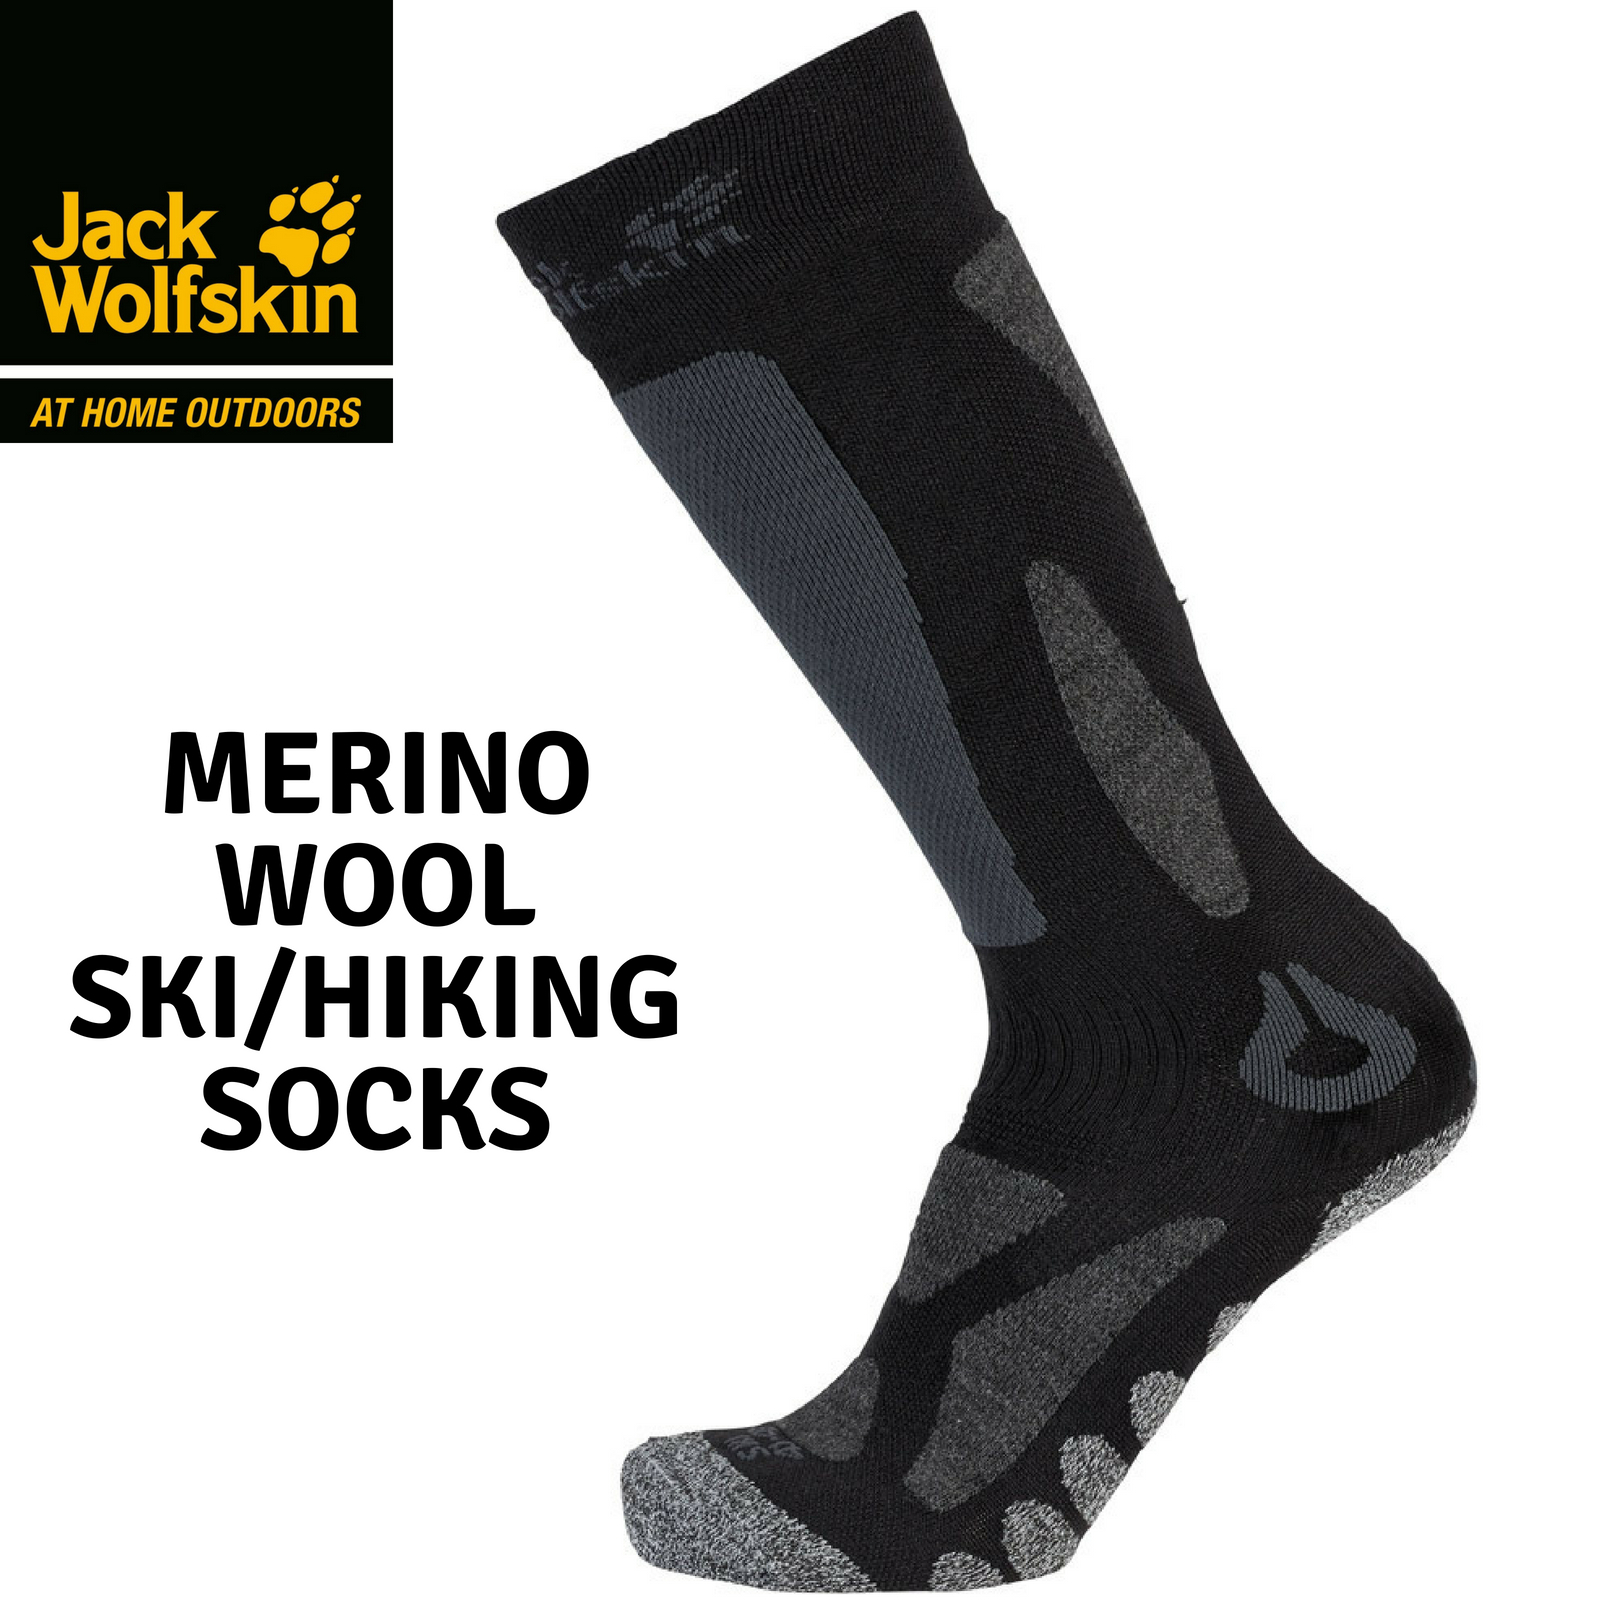 Jack,Wolfskin Merino Wool High Cut Ski Socks Warm Winter Hiking Knee High